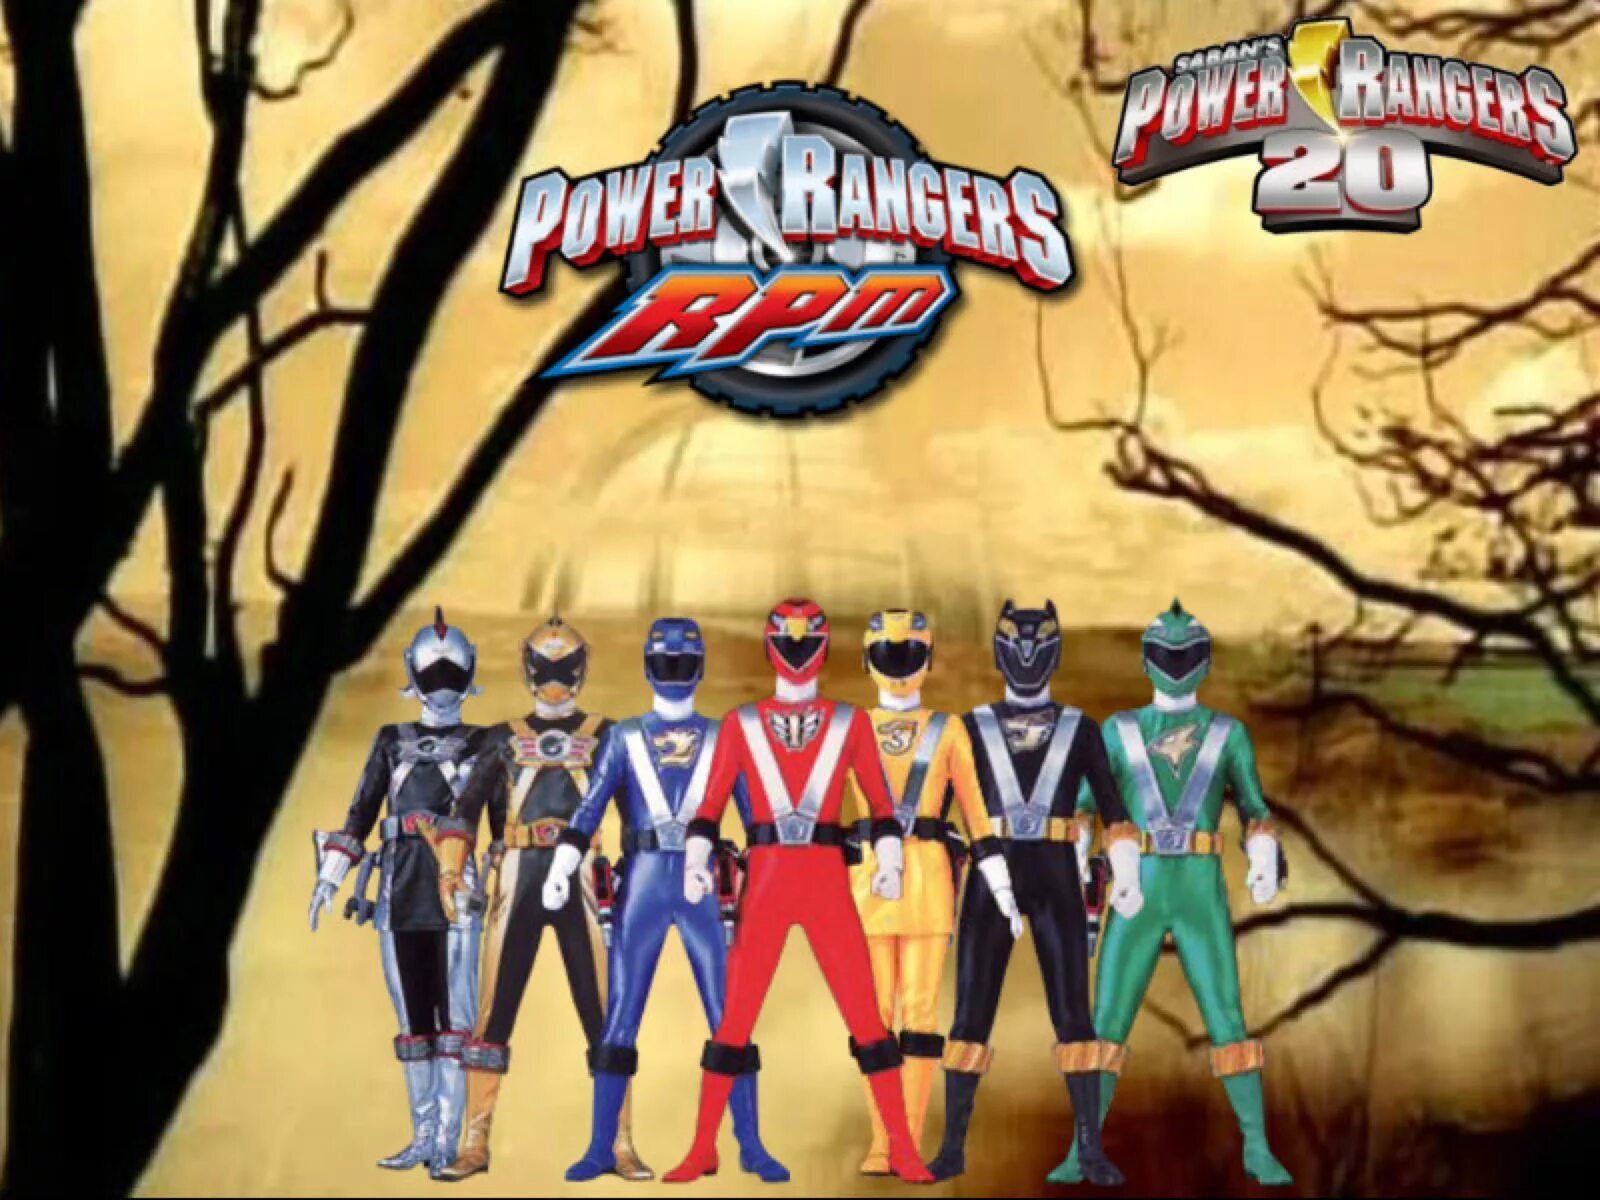 Могучие рейнджеры р. Могучие рейнджеры 20. Могучие рейнджеры РПМ. Power Rangers RPM. Могучие рейнджеры навсегда.